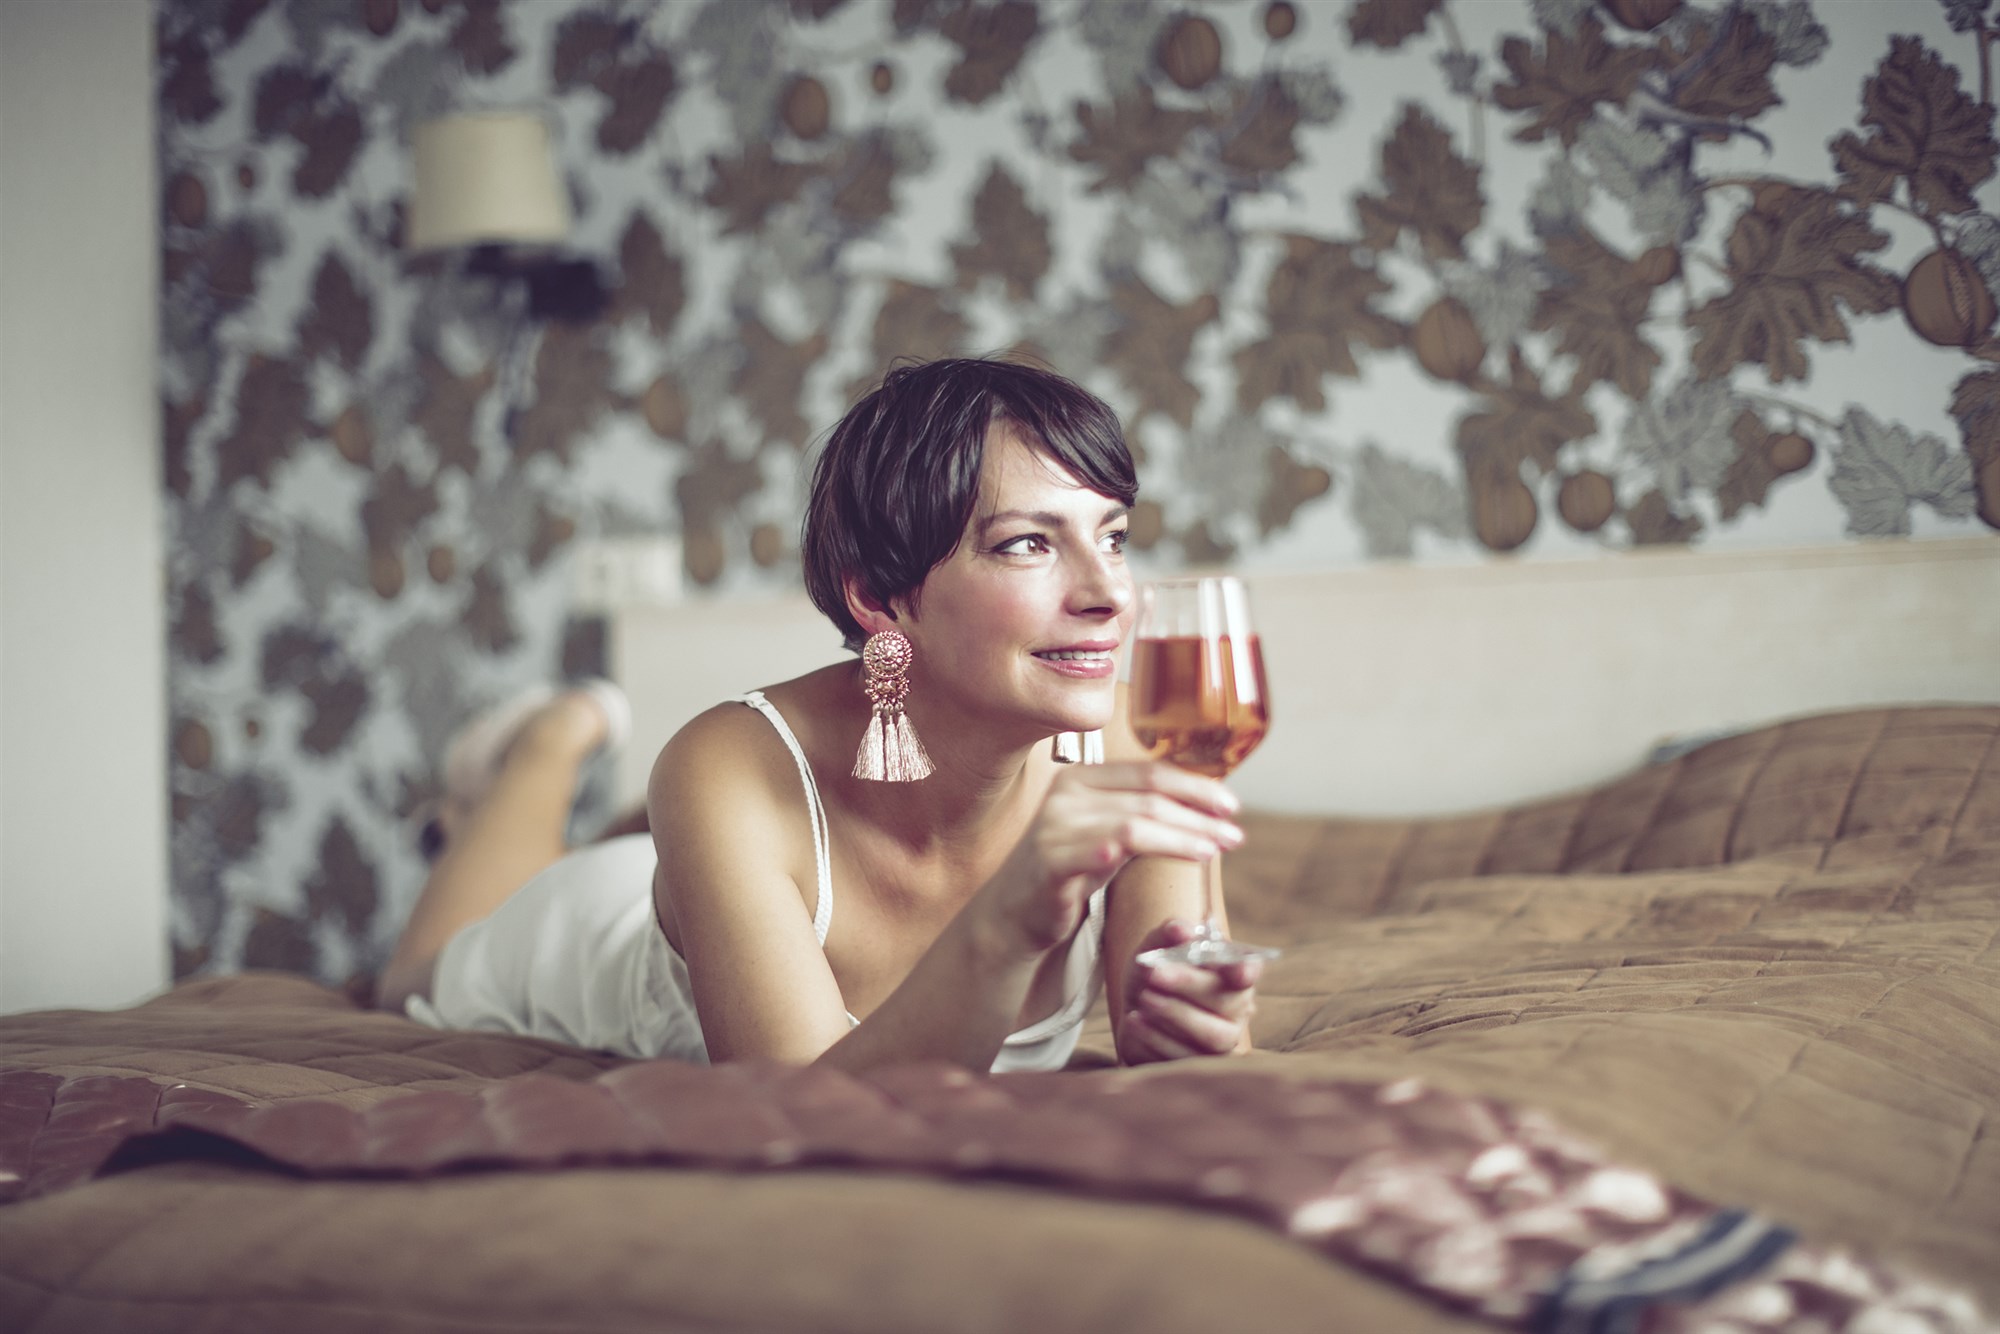 180801-stock-woman-wine-bed-pajamas-ew-126p_db060bd04302ddaddb2528172042918e.fit-2000w.jpg